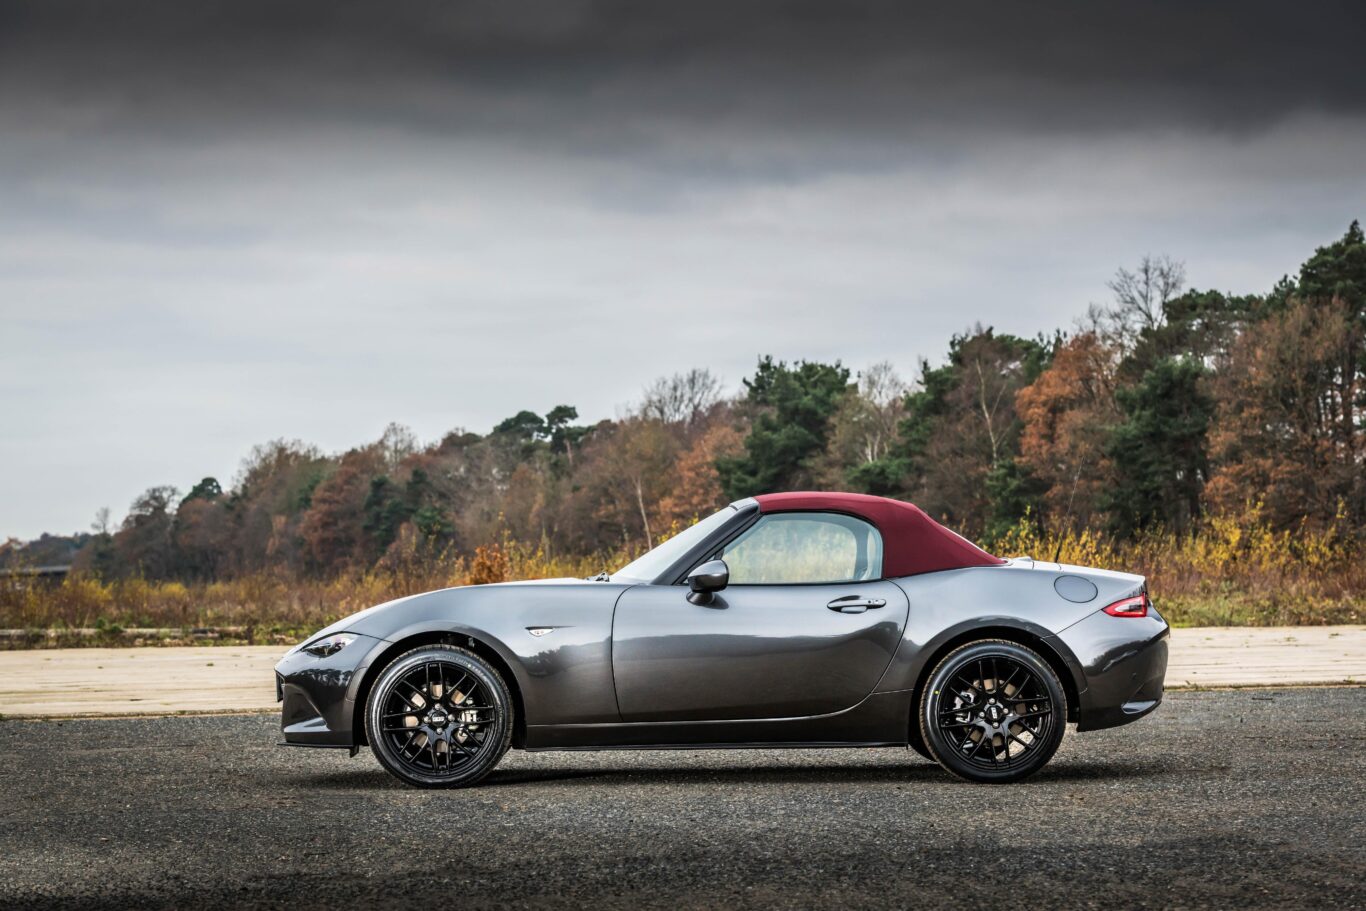 Mazda's MX-5 continues to enjoy plenty of popularity